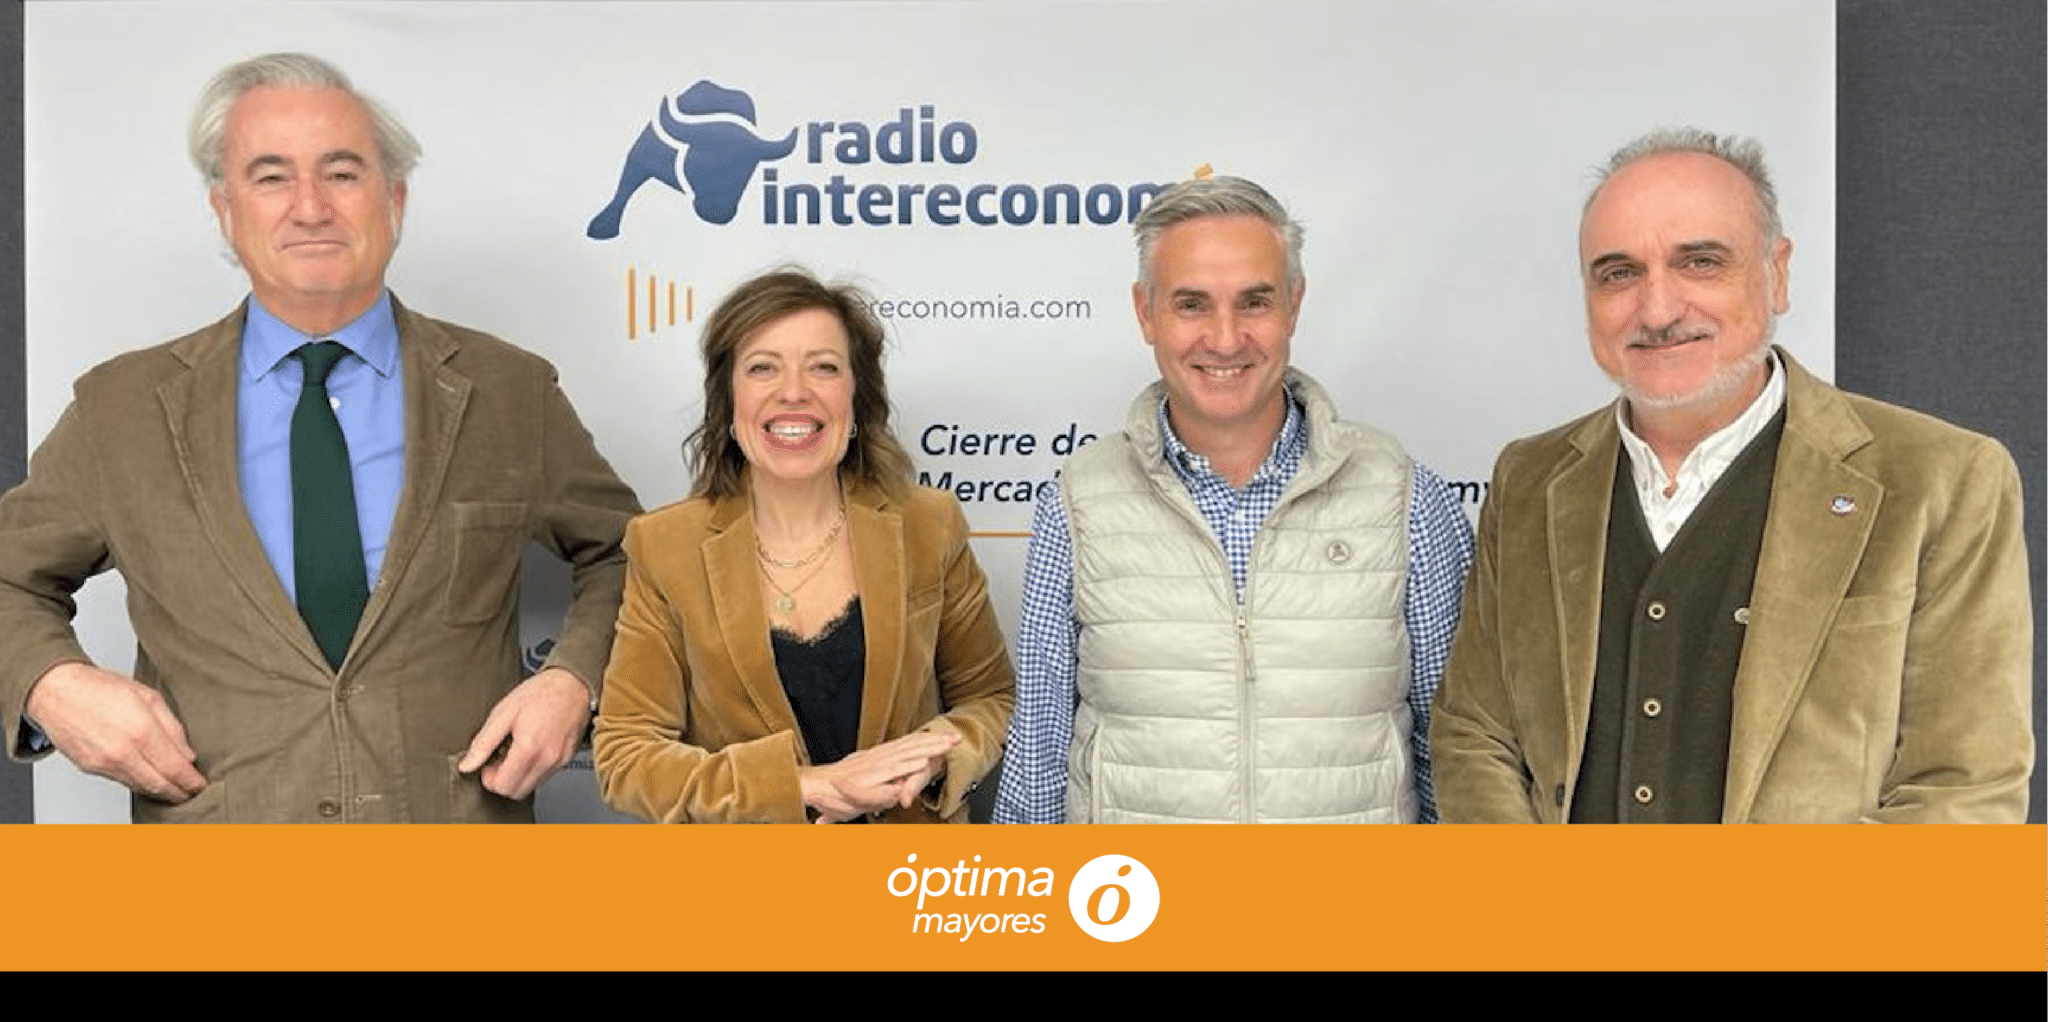 equipo_optima_mayores_intereconomia_radio